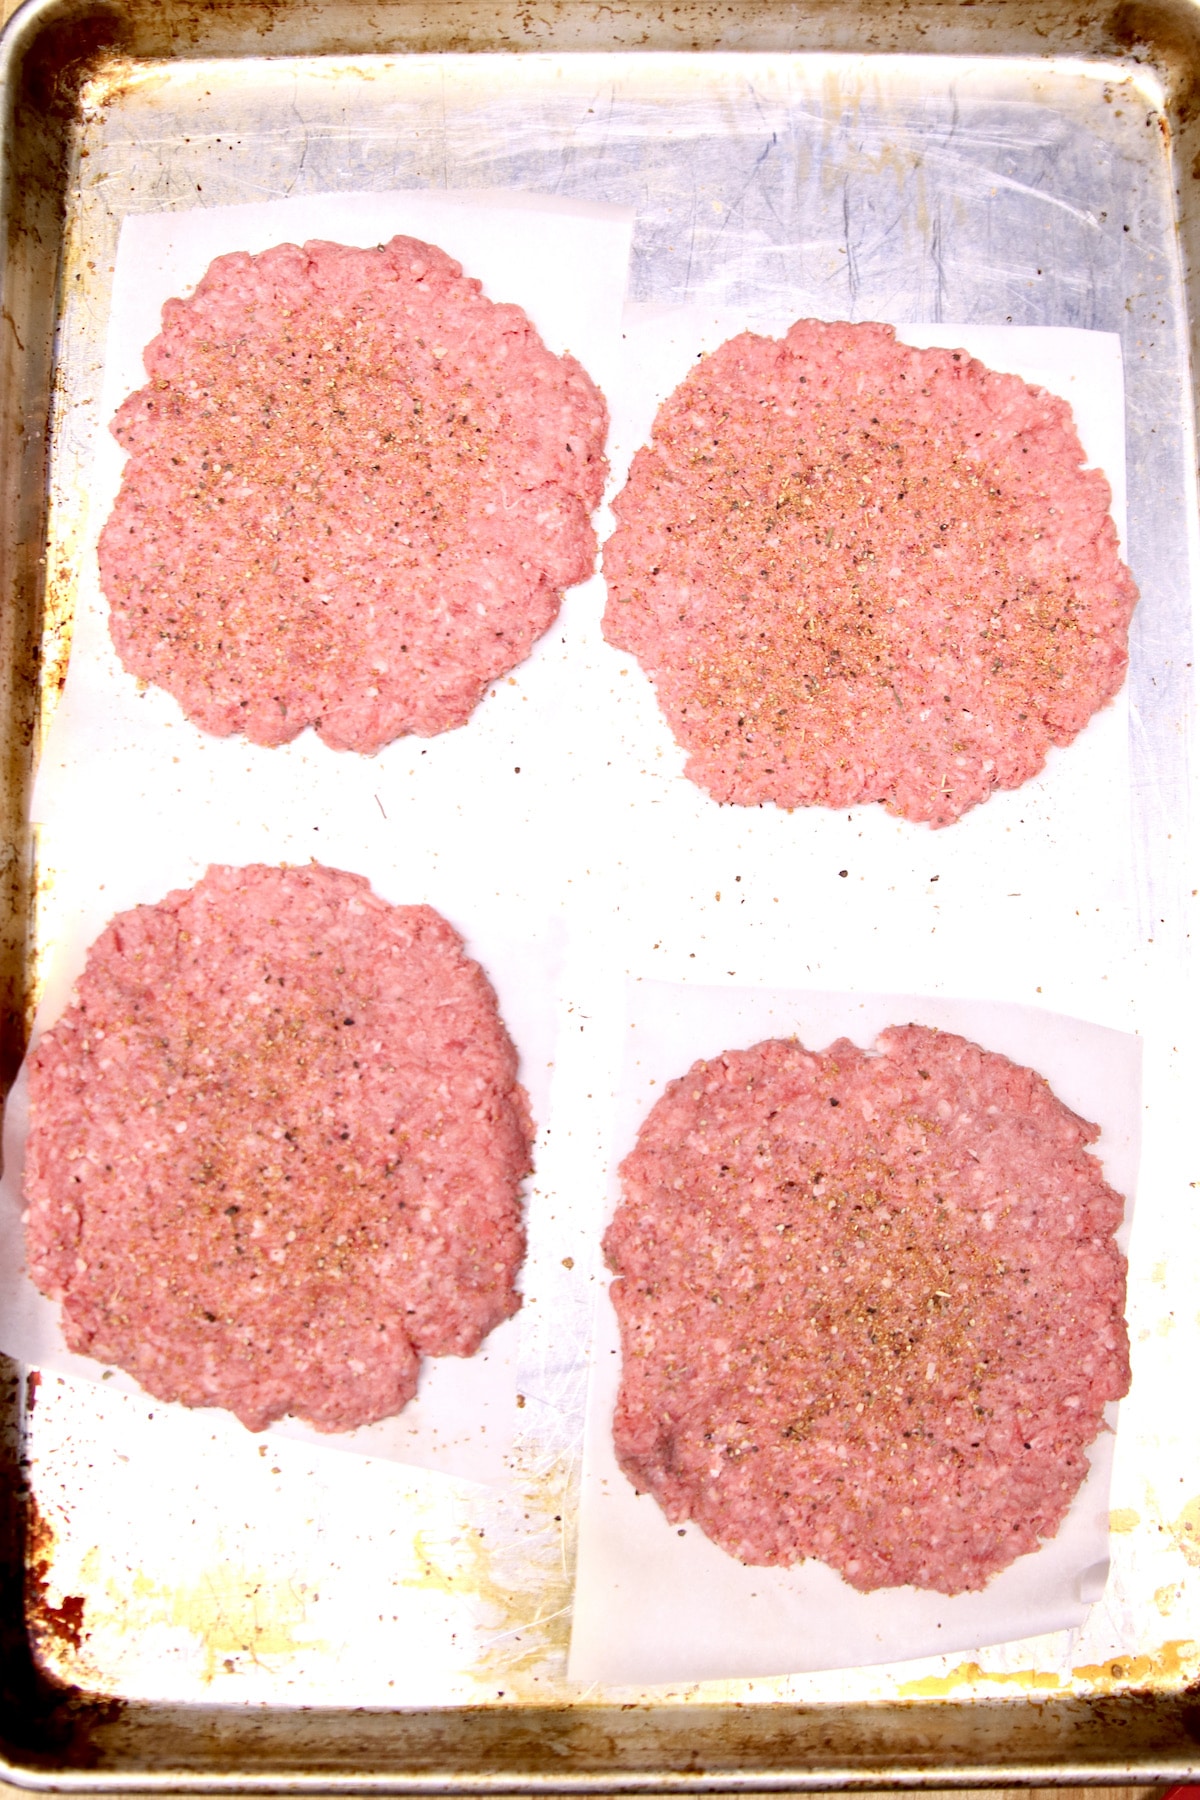 4 ground beef patties on a sheet pan.